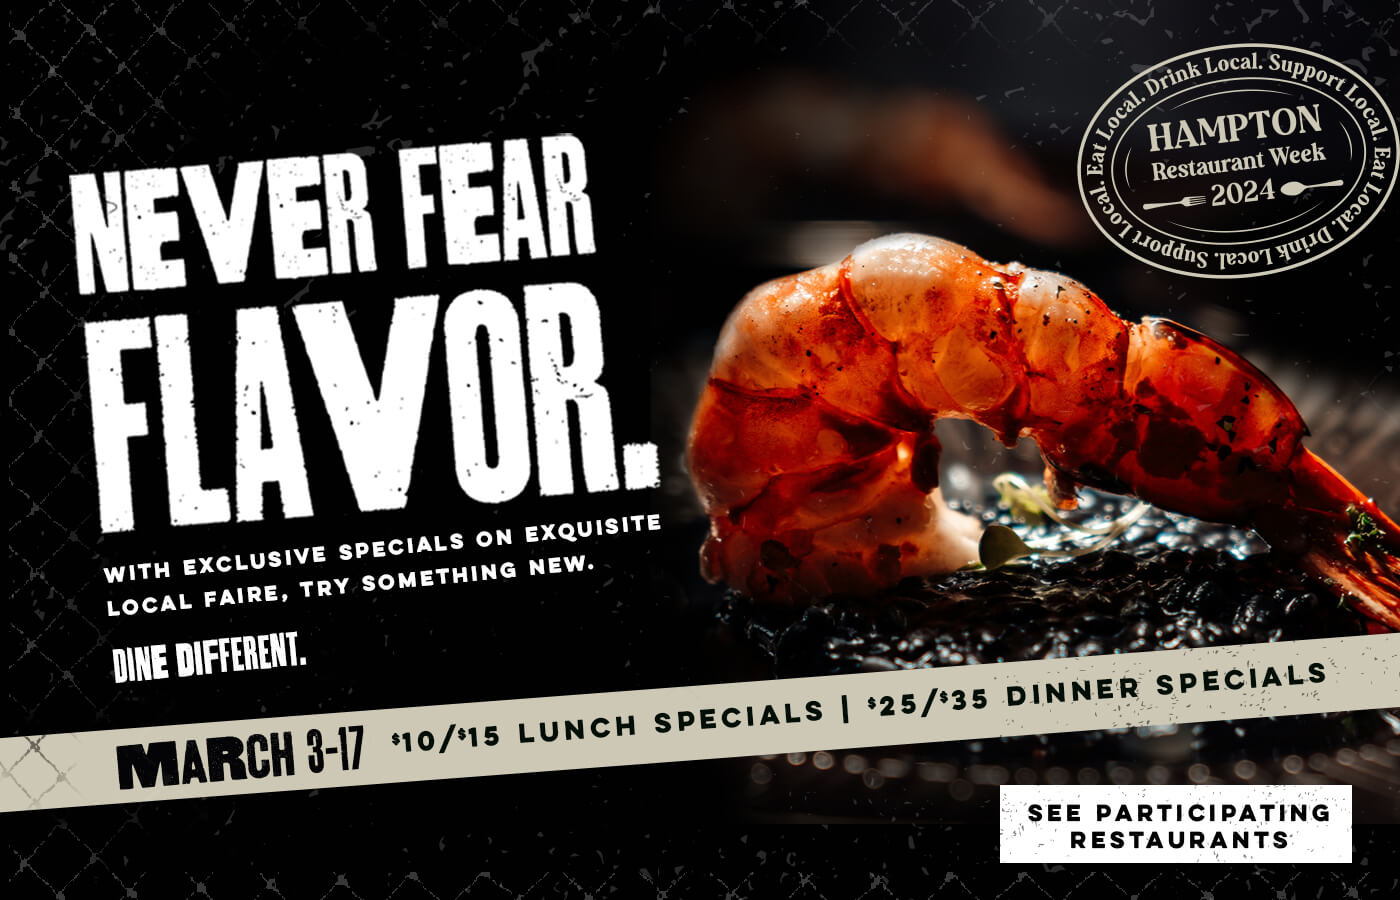 Never Fear Flavor - Hampton Virginia Restaurant Week March 3-17, 2024